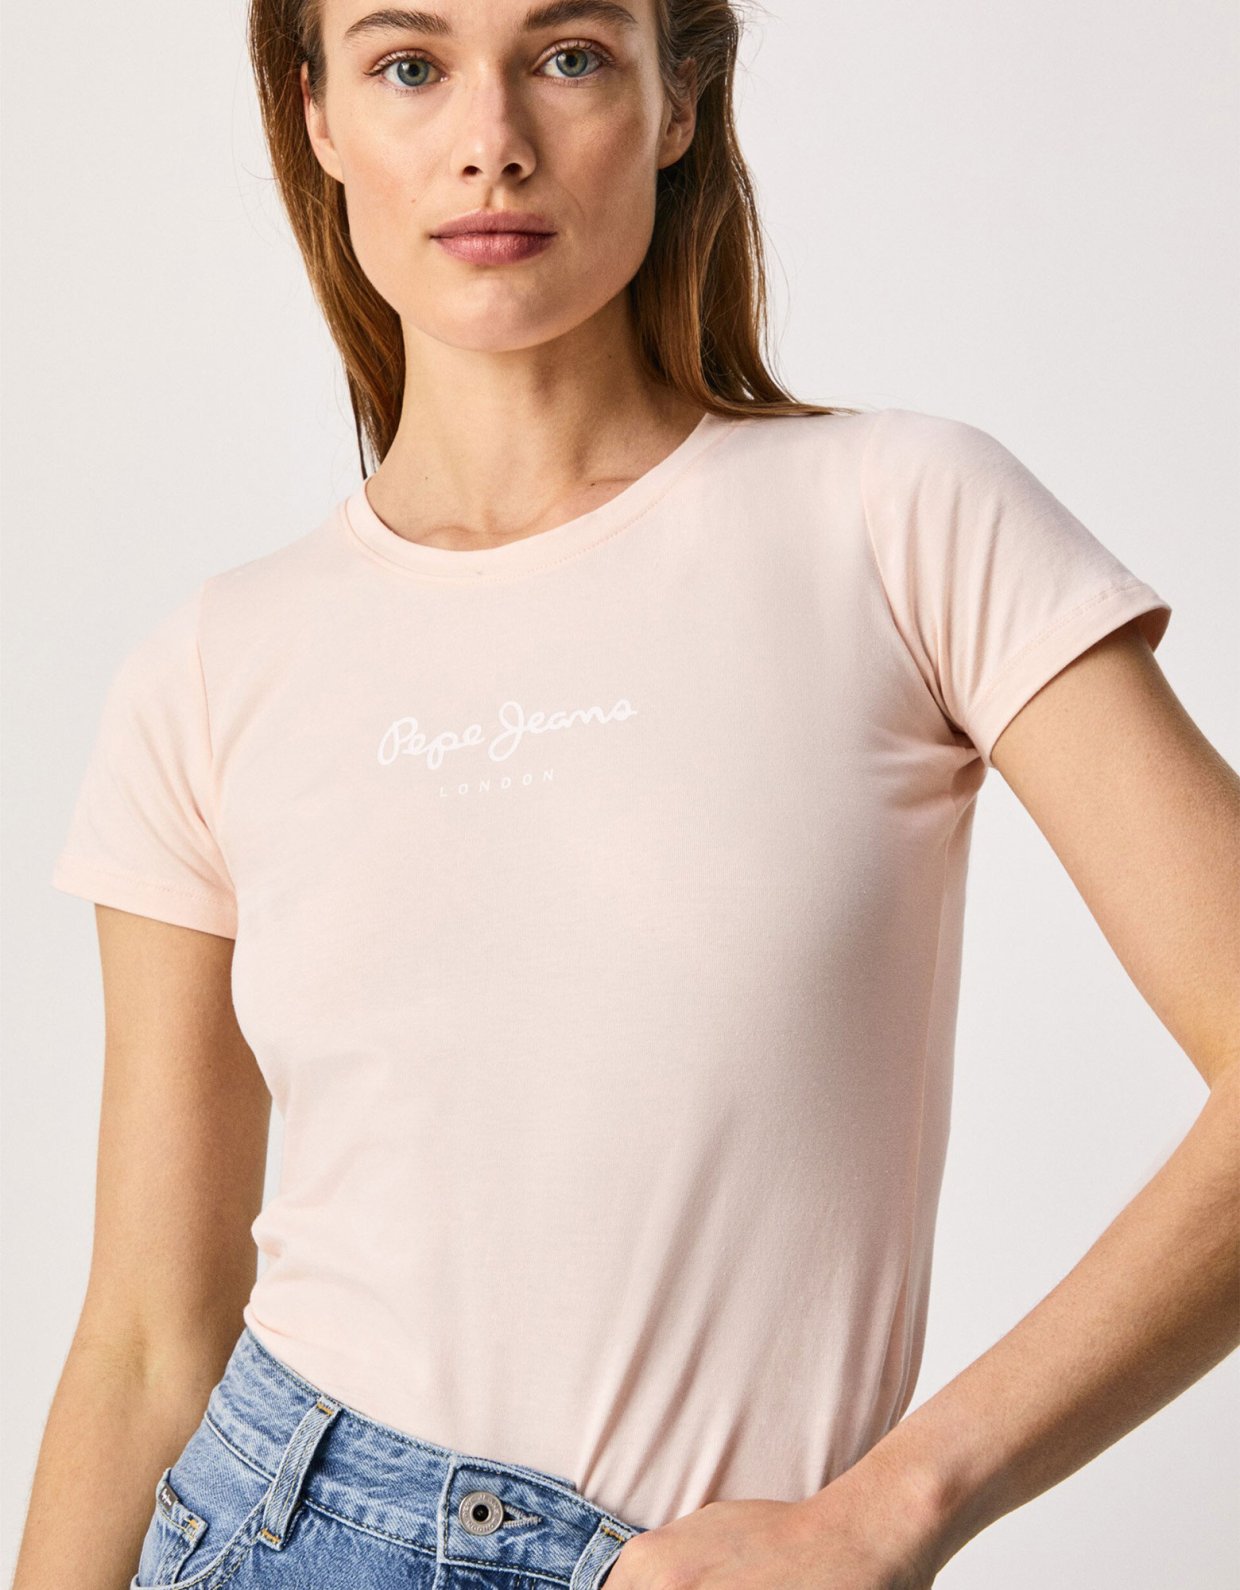 Pepe Jeans New Virginia t-shirt light pink